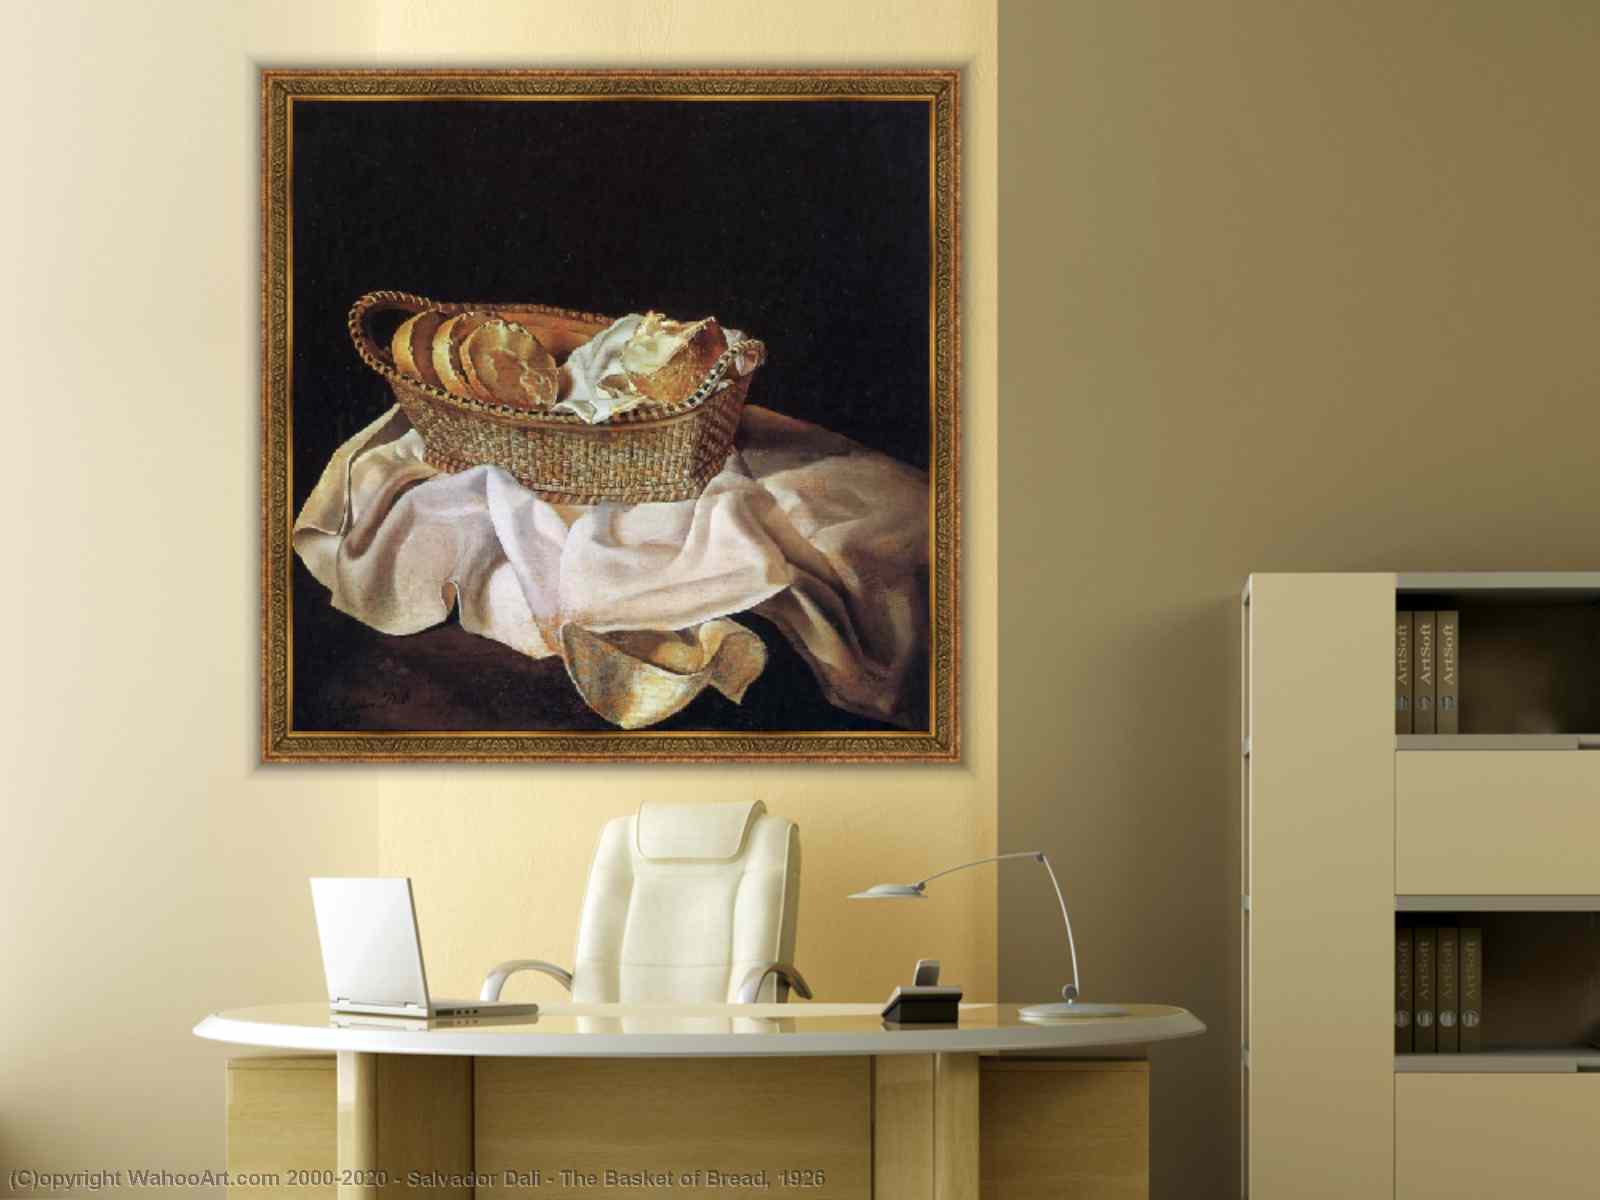 La cesta de pan de Dalí - Apuntes de arte